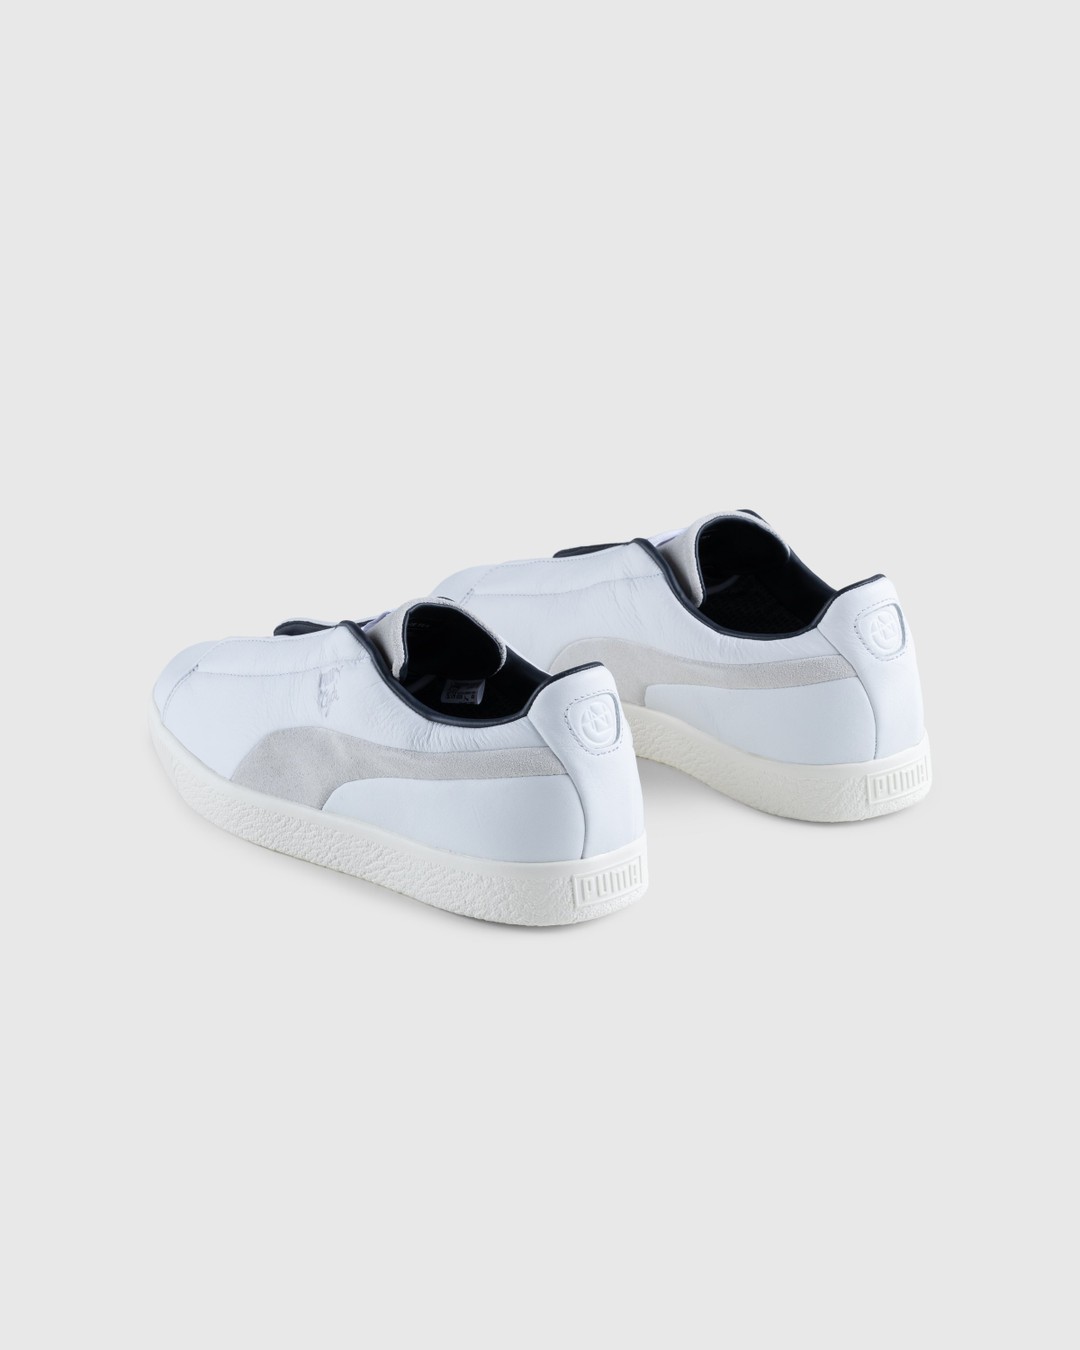 Puma x Nanamica – Clyde GORE-TEX White - Sneakers - White - Image 4